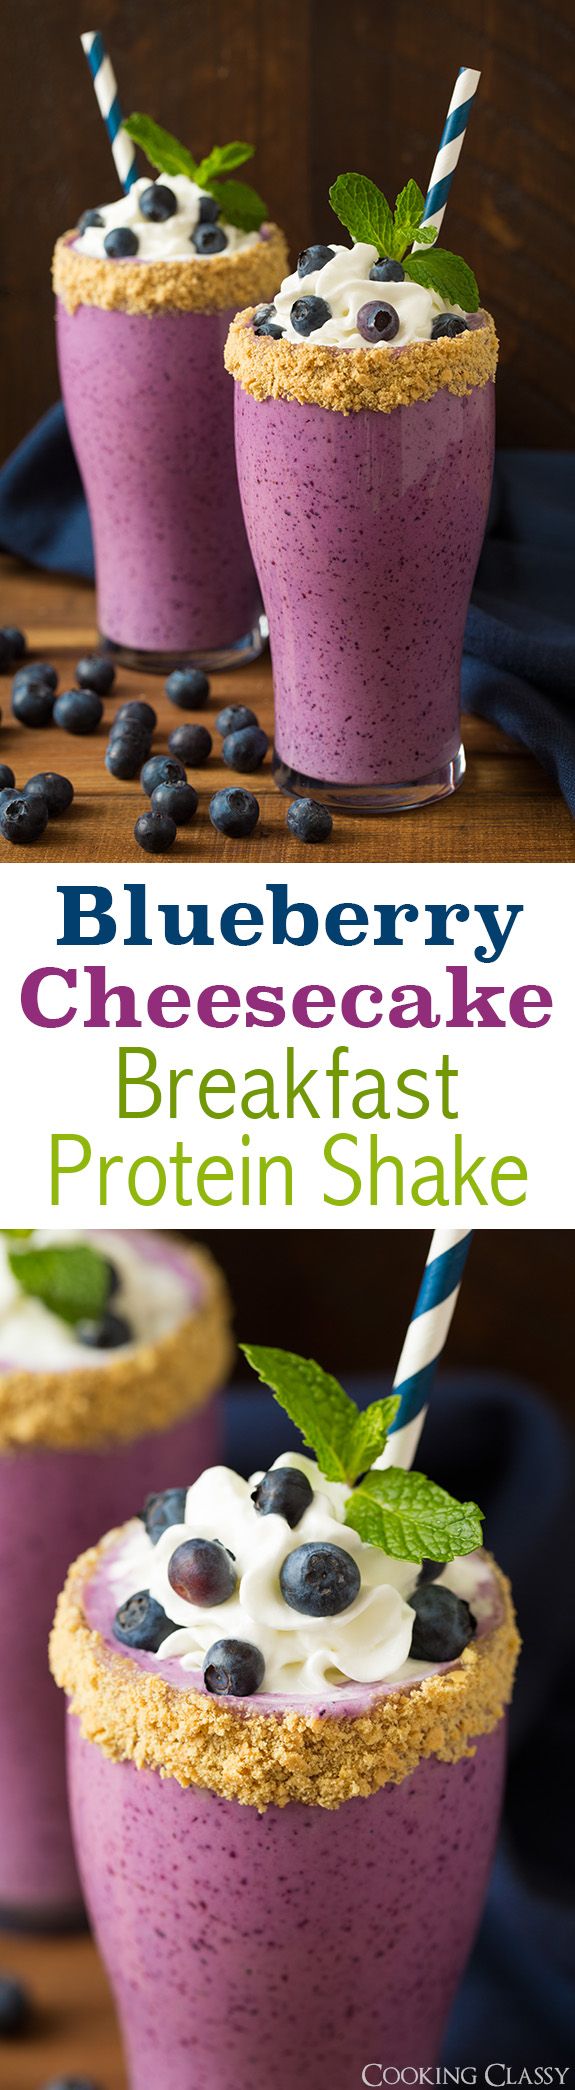 Blueberry Cheesecake Breakfast Protein Shake